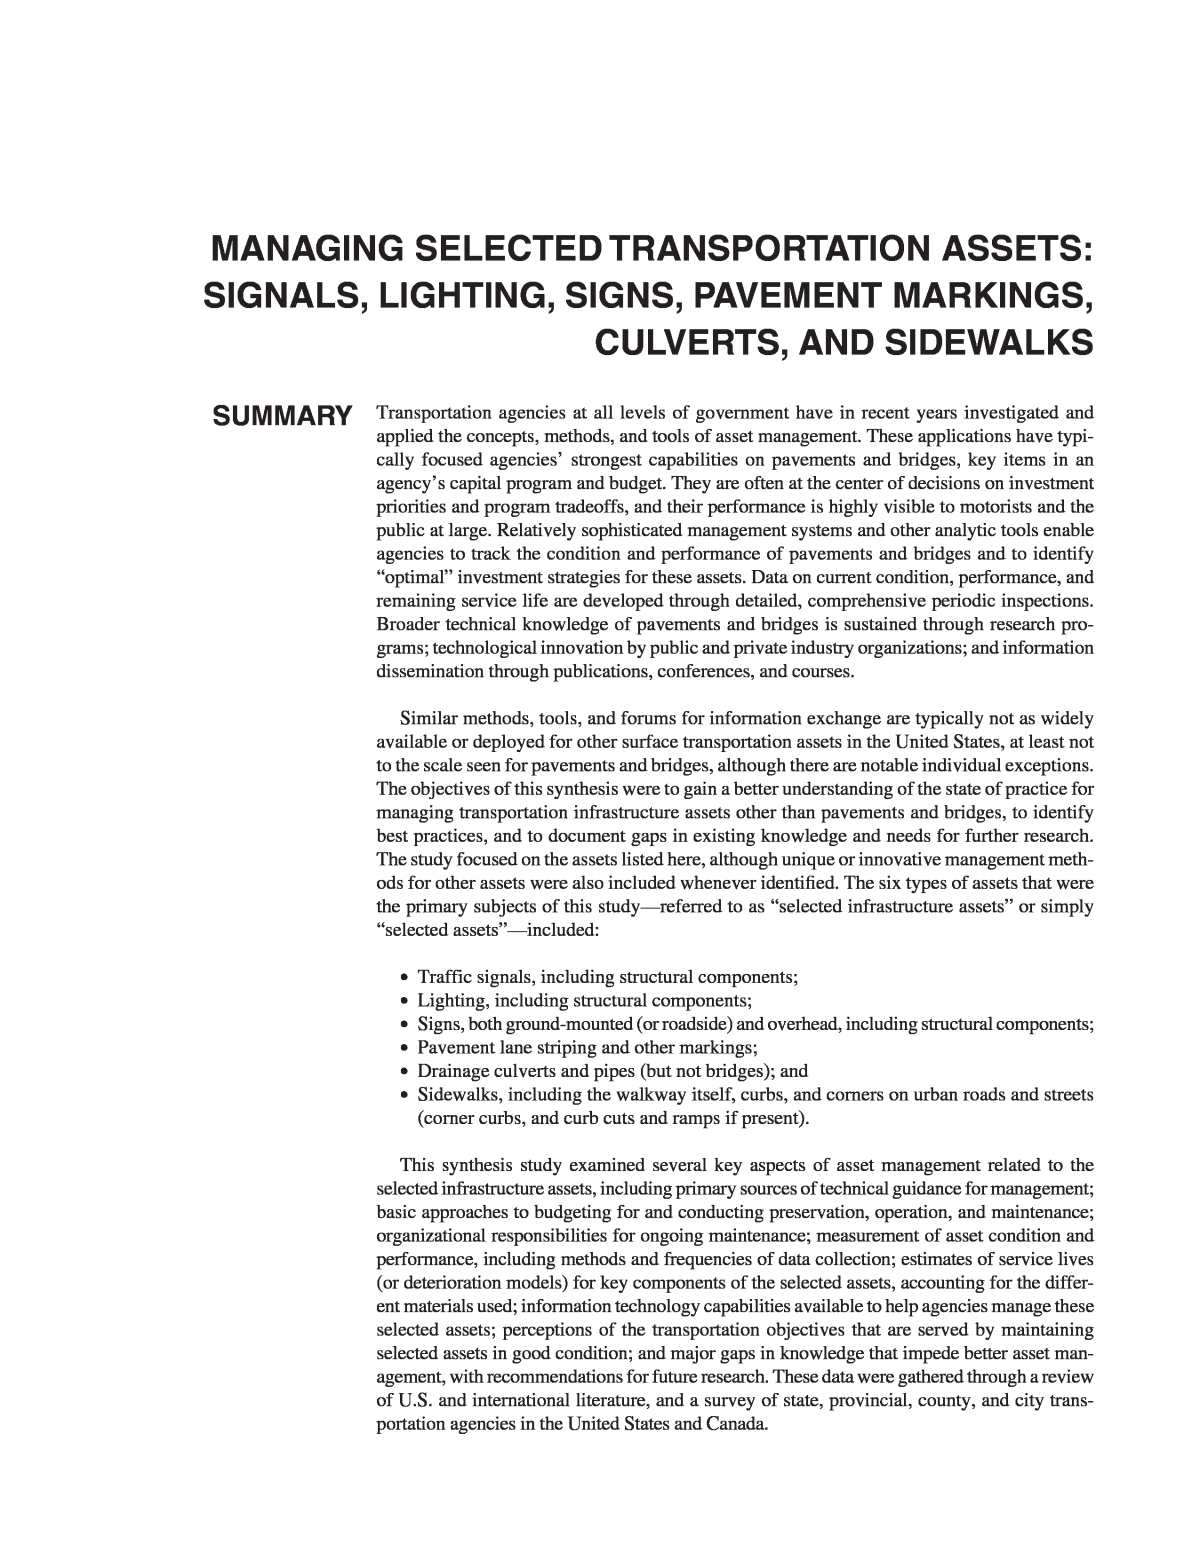 Chapter Seven - Sidewalks, Managing Selected Transportation Assets:  Signals, Lighting, Signs, Pavement Markings, Culverts, and Sidewalks